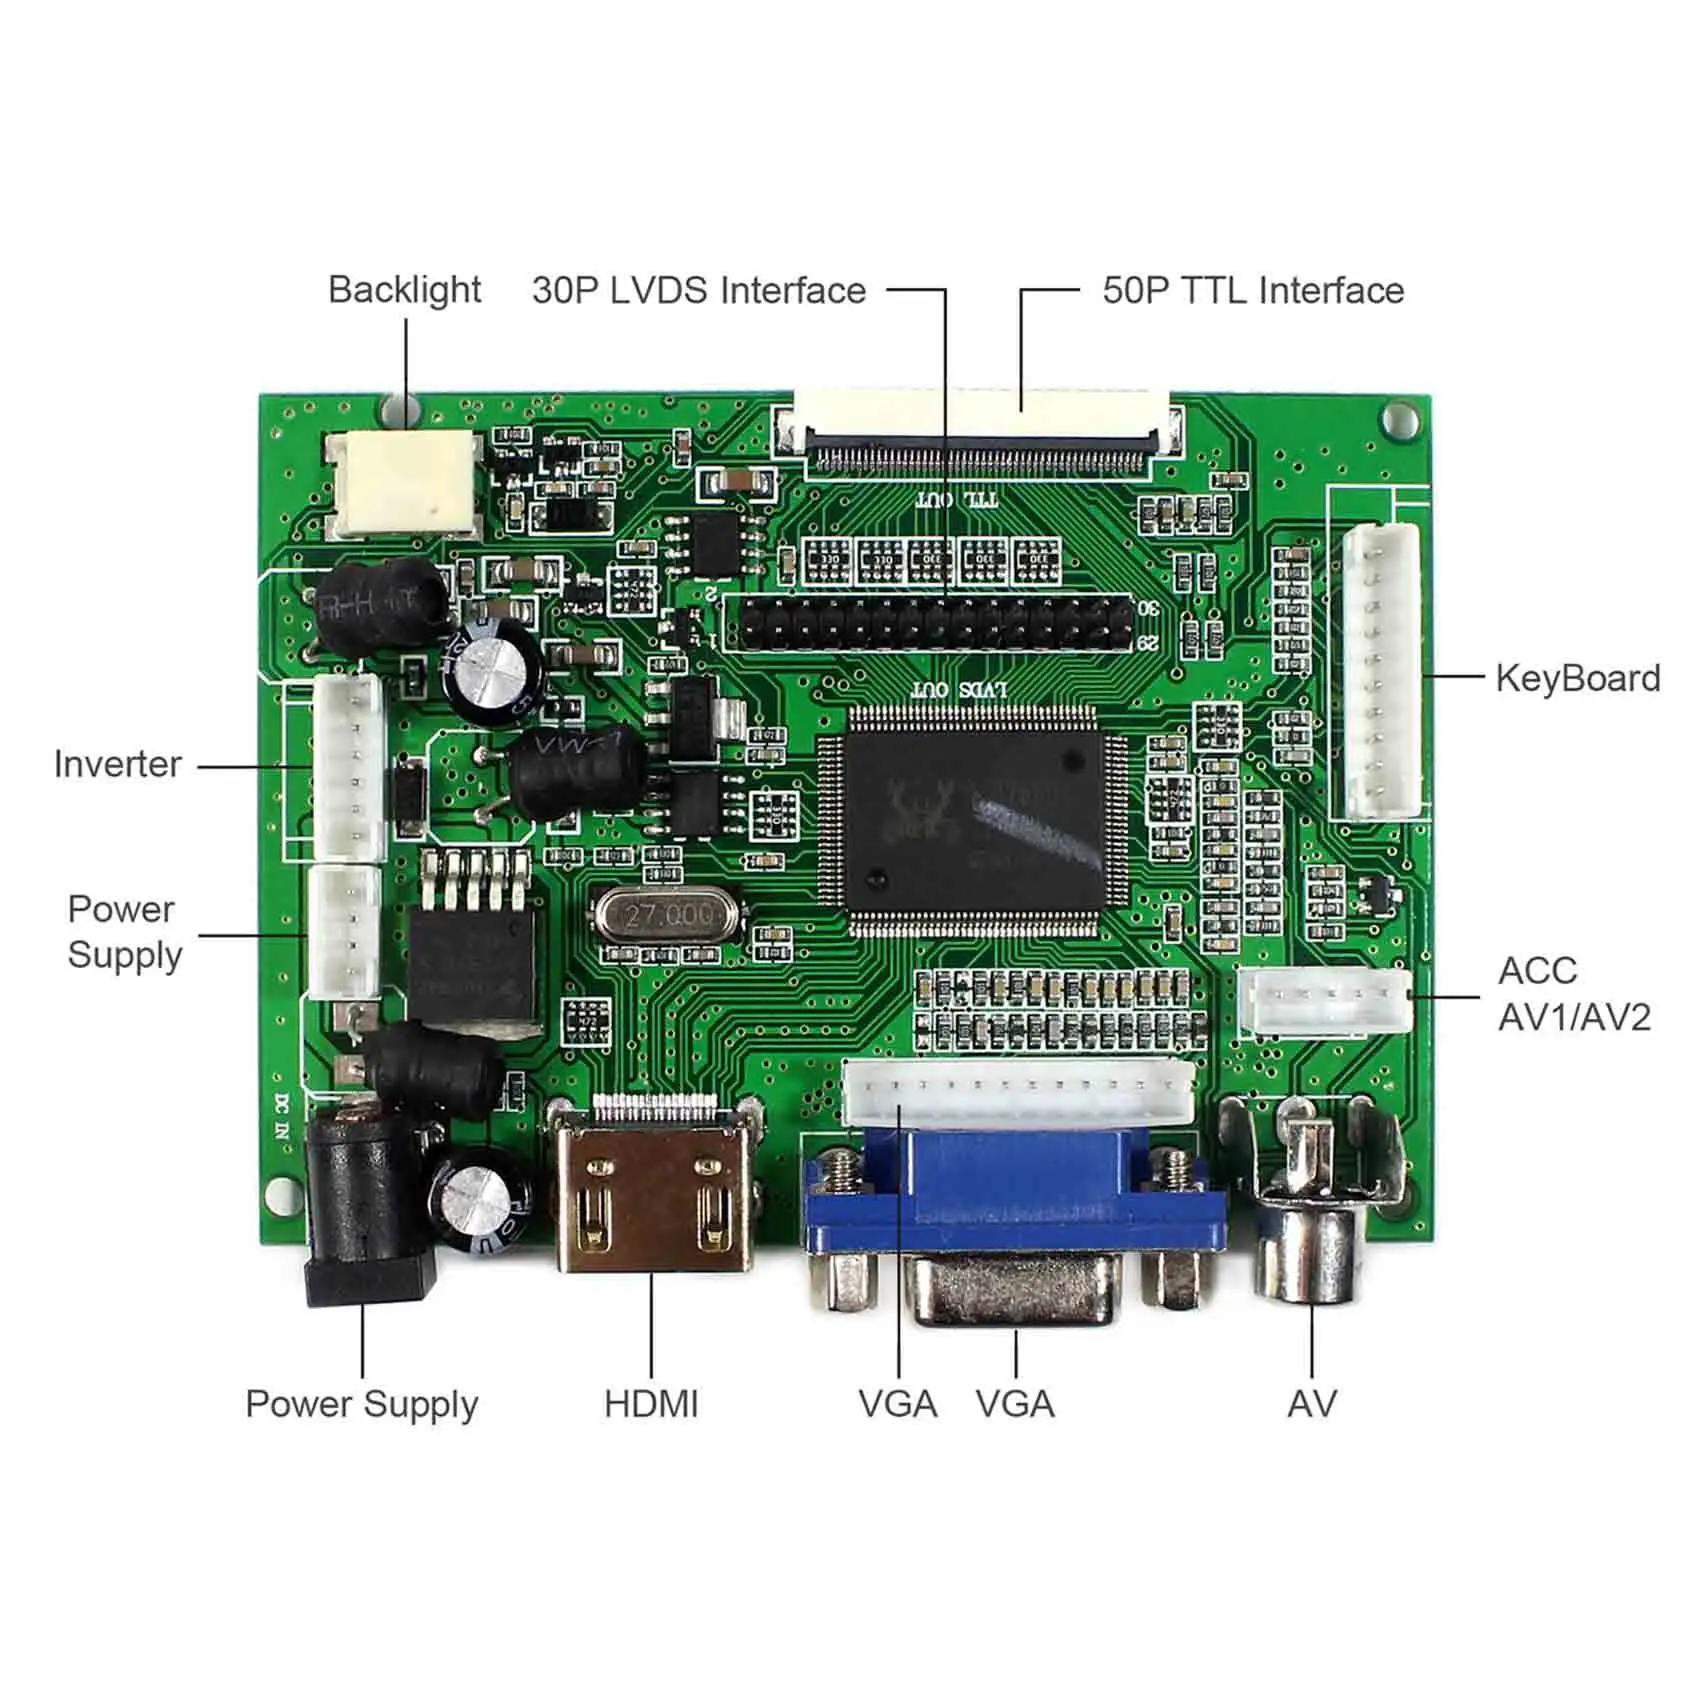 HDMI VGA 2AV ЖК-плата контроллера работает для 15,6 дюймов lp156wh1 ltn156at01 n156b3 1366x768 lcd